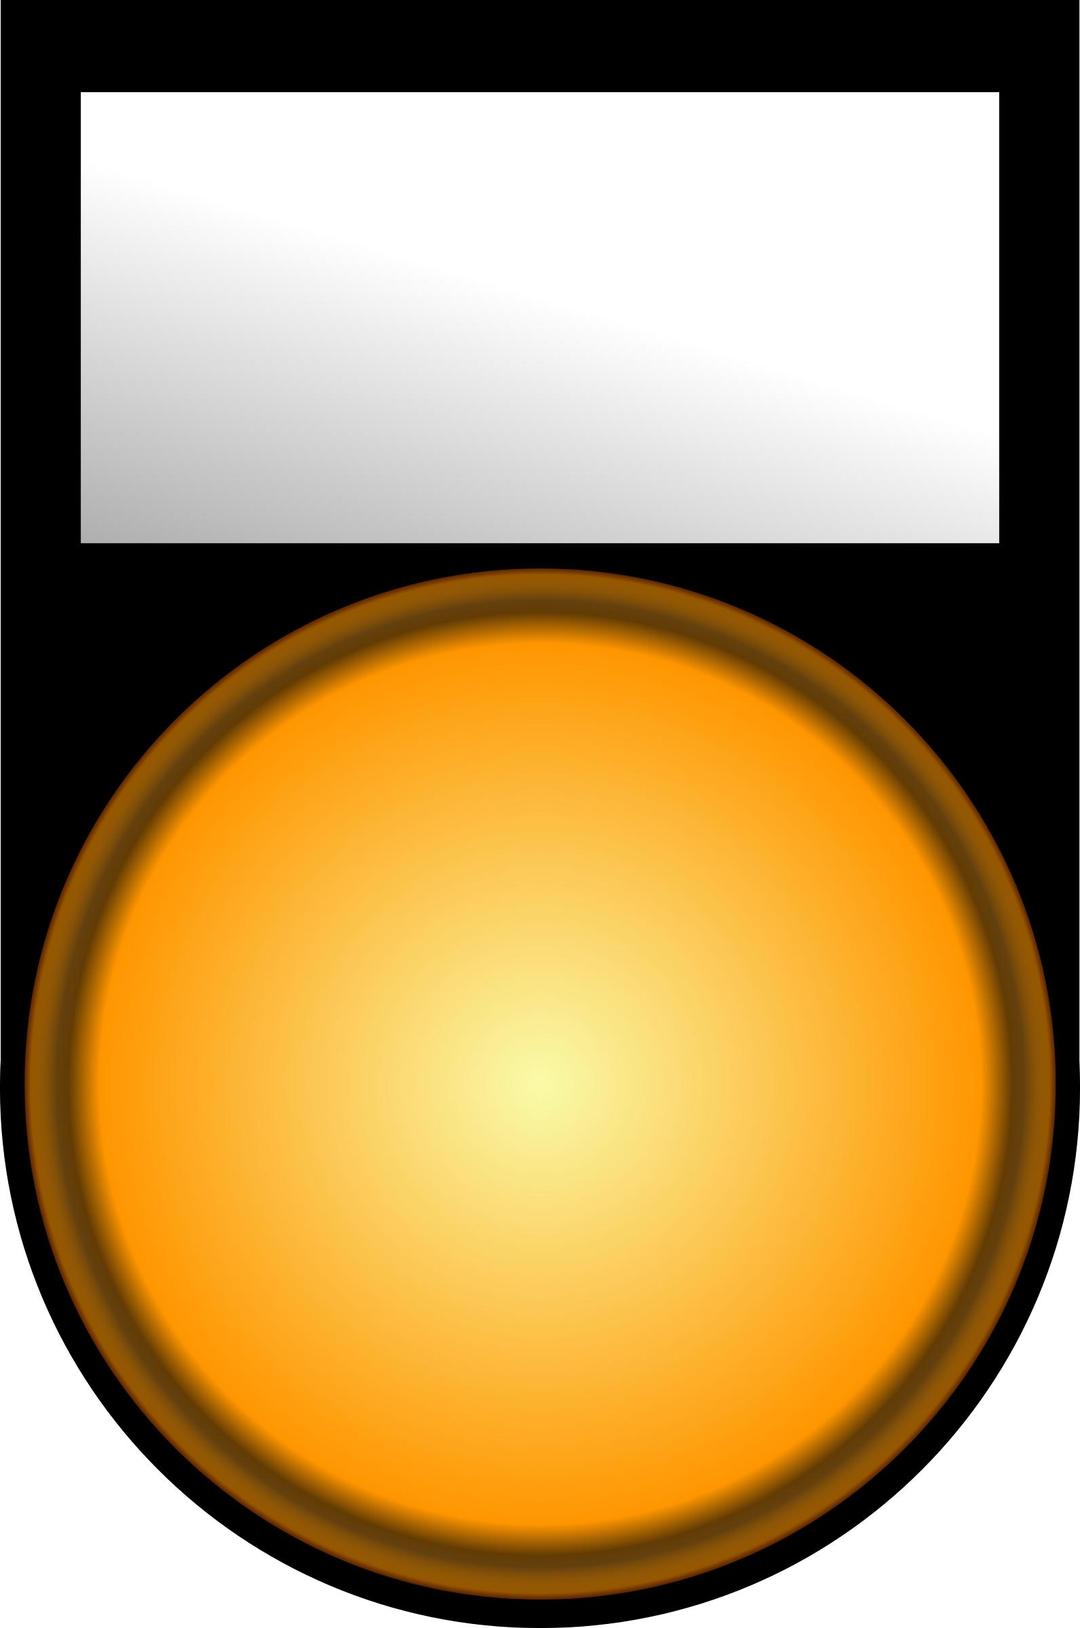 Voyant Orange Allume - Orange Light ON png transparent